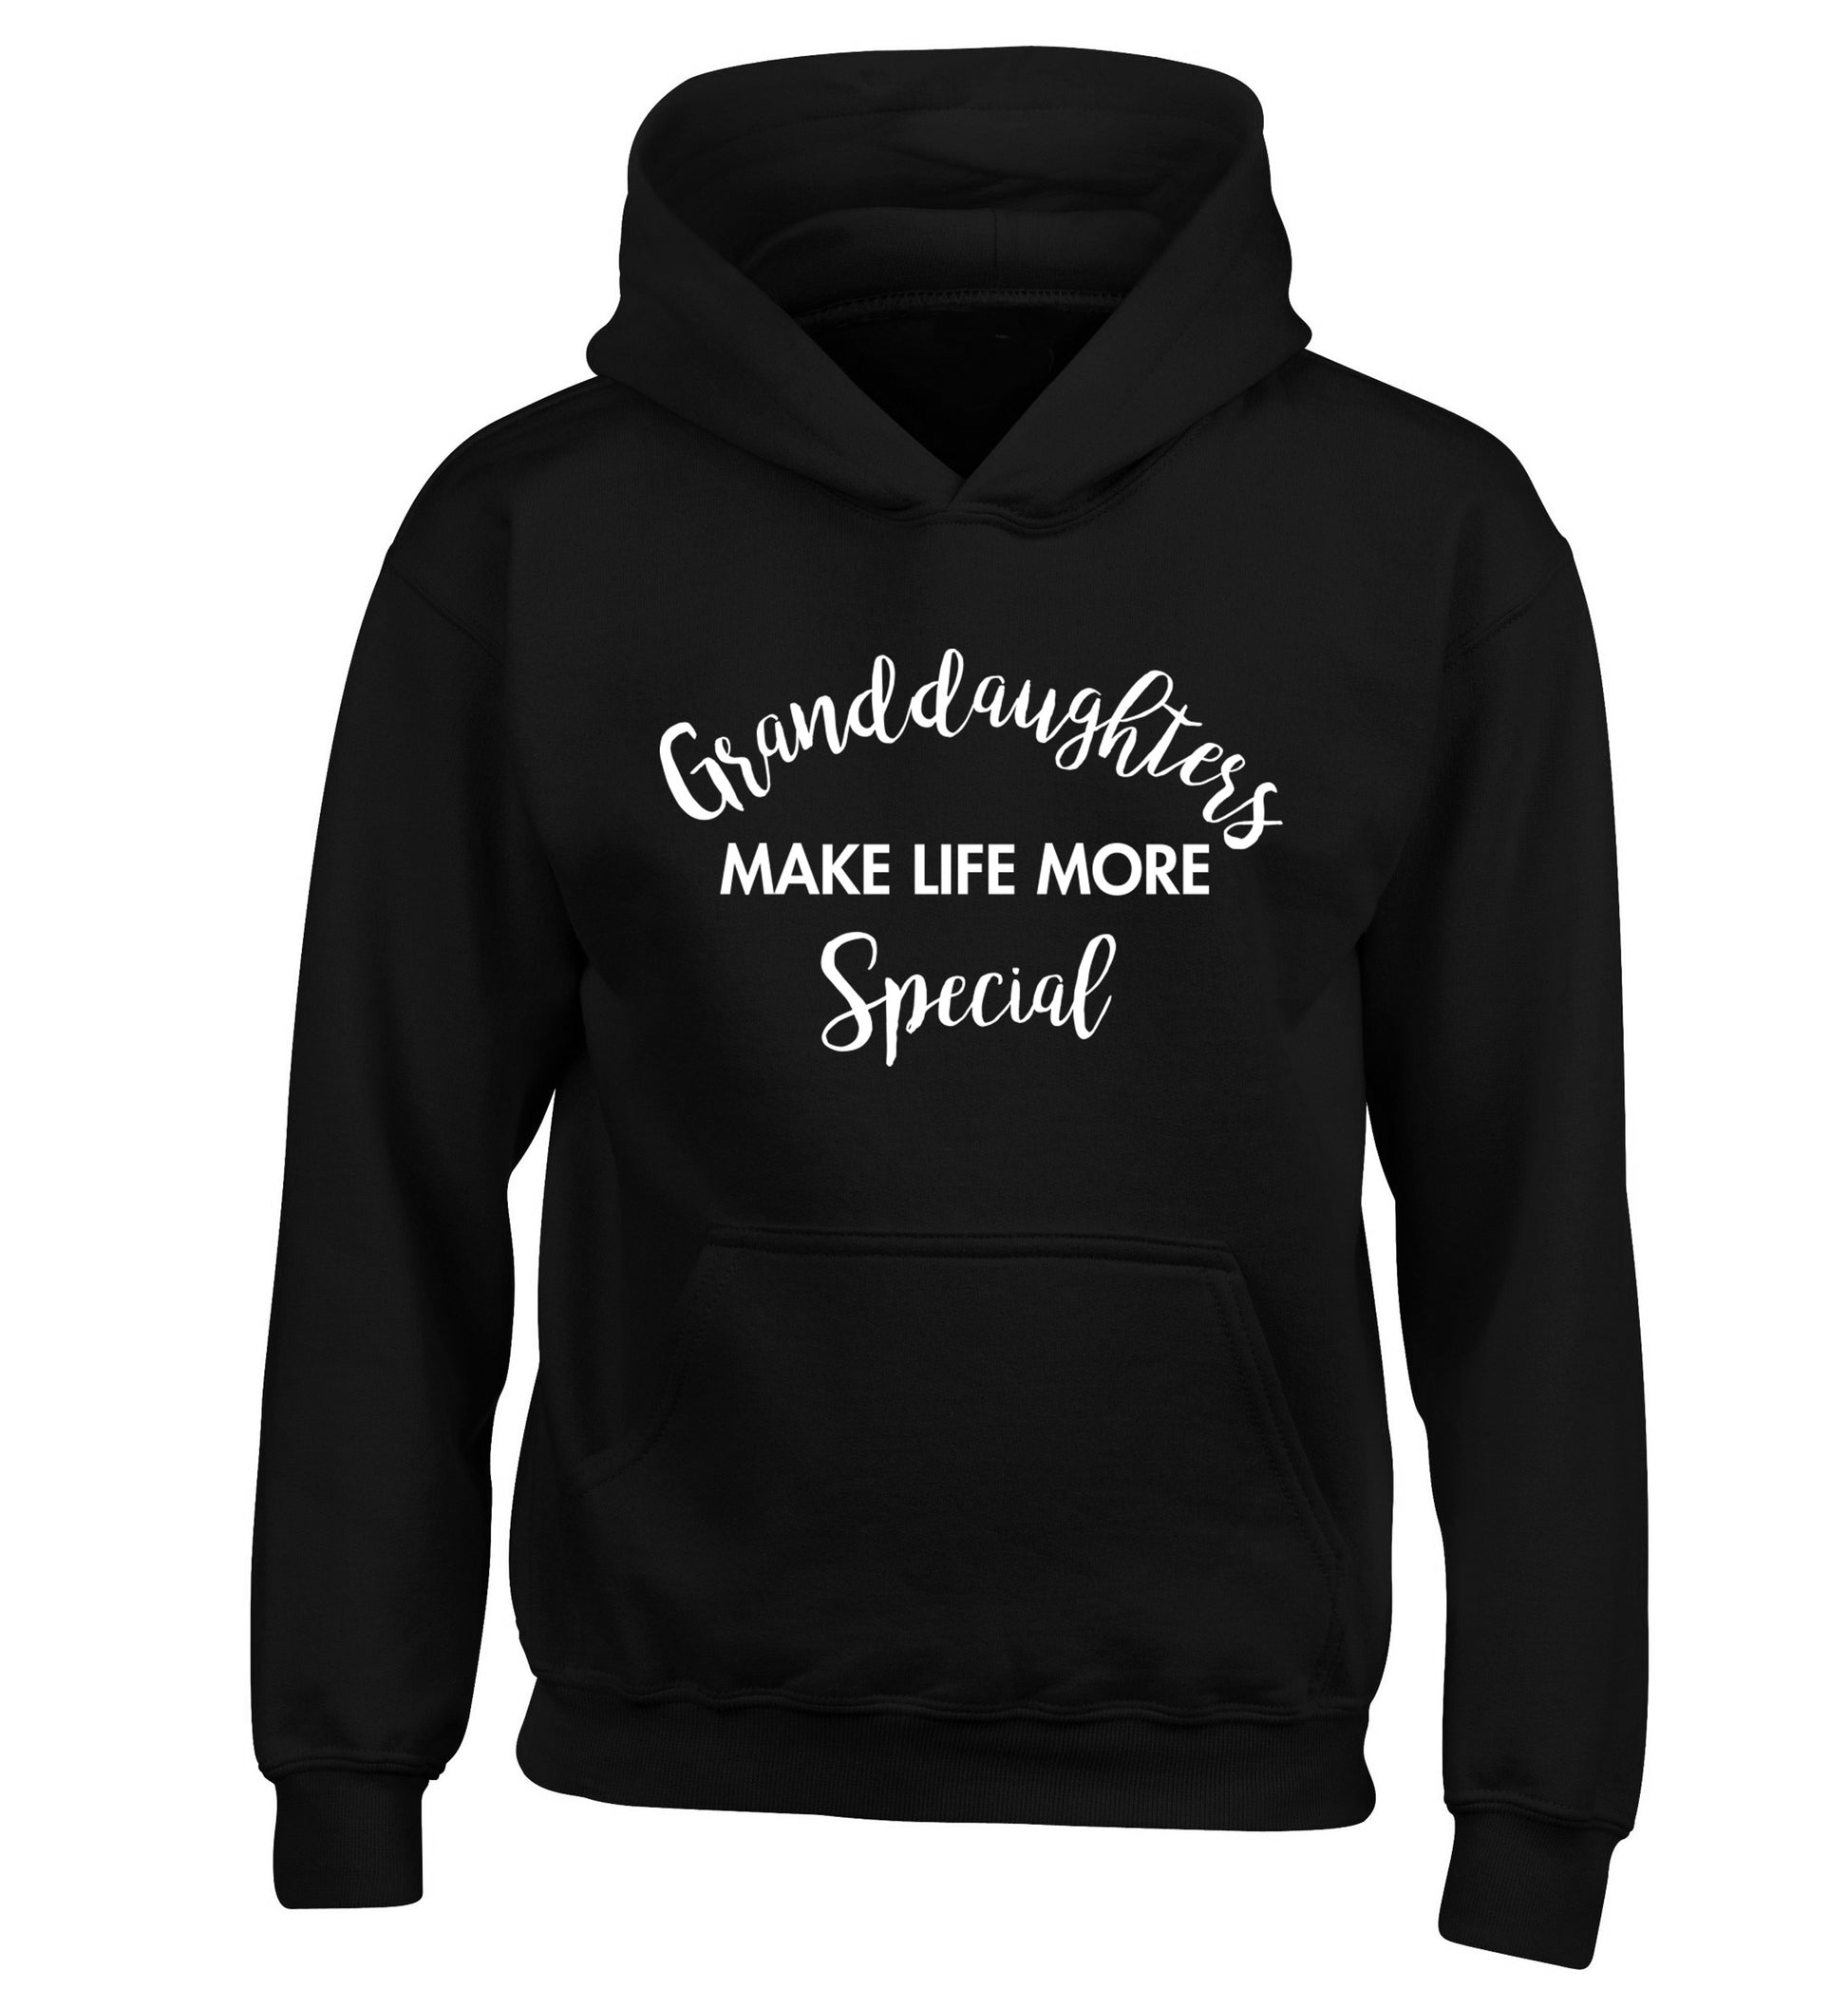 Granddaughters make life more special children's black hoodie 12-14 Years